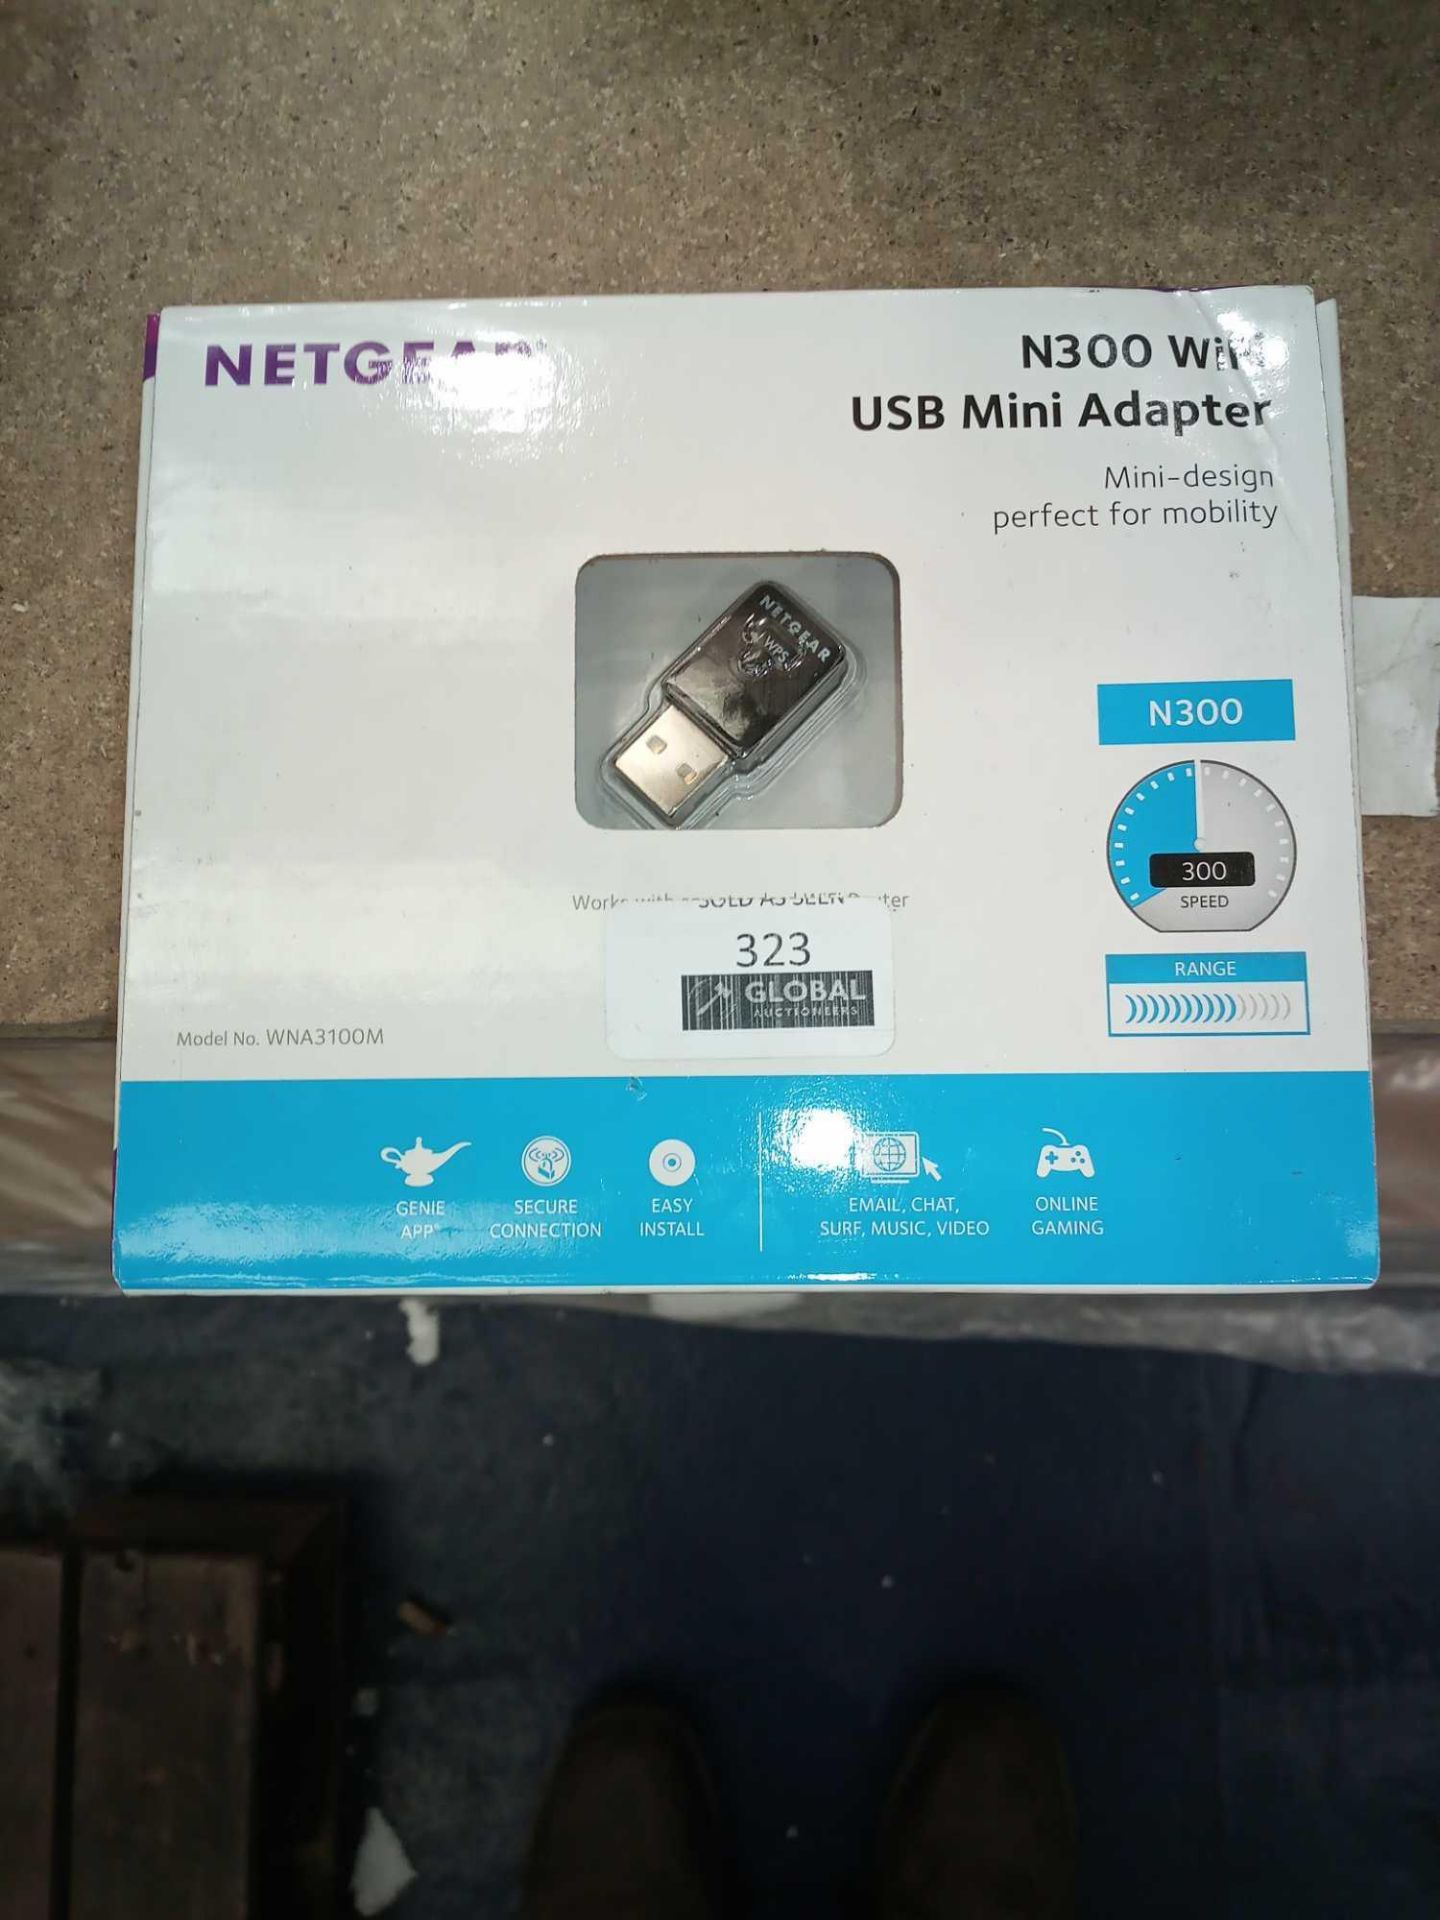 Rrp £80. Boxed Netgear N300 Mini Usb Wifi Adapter.